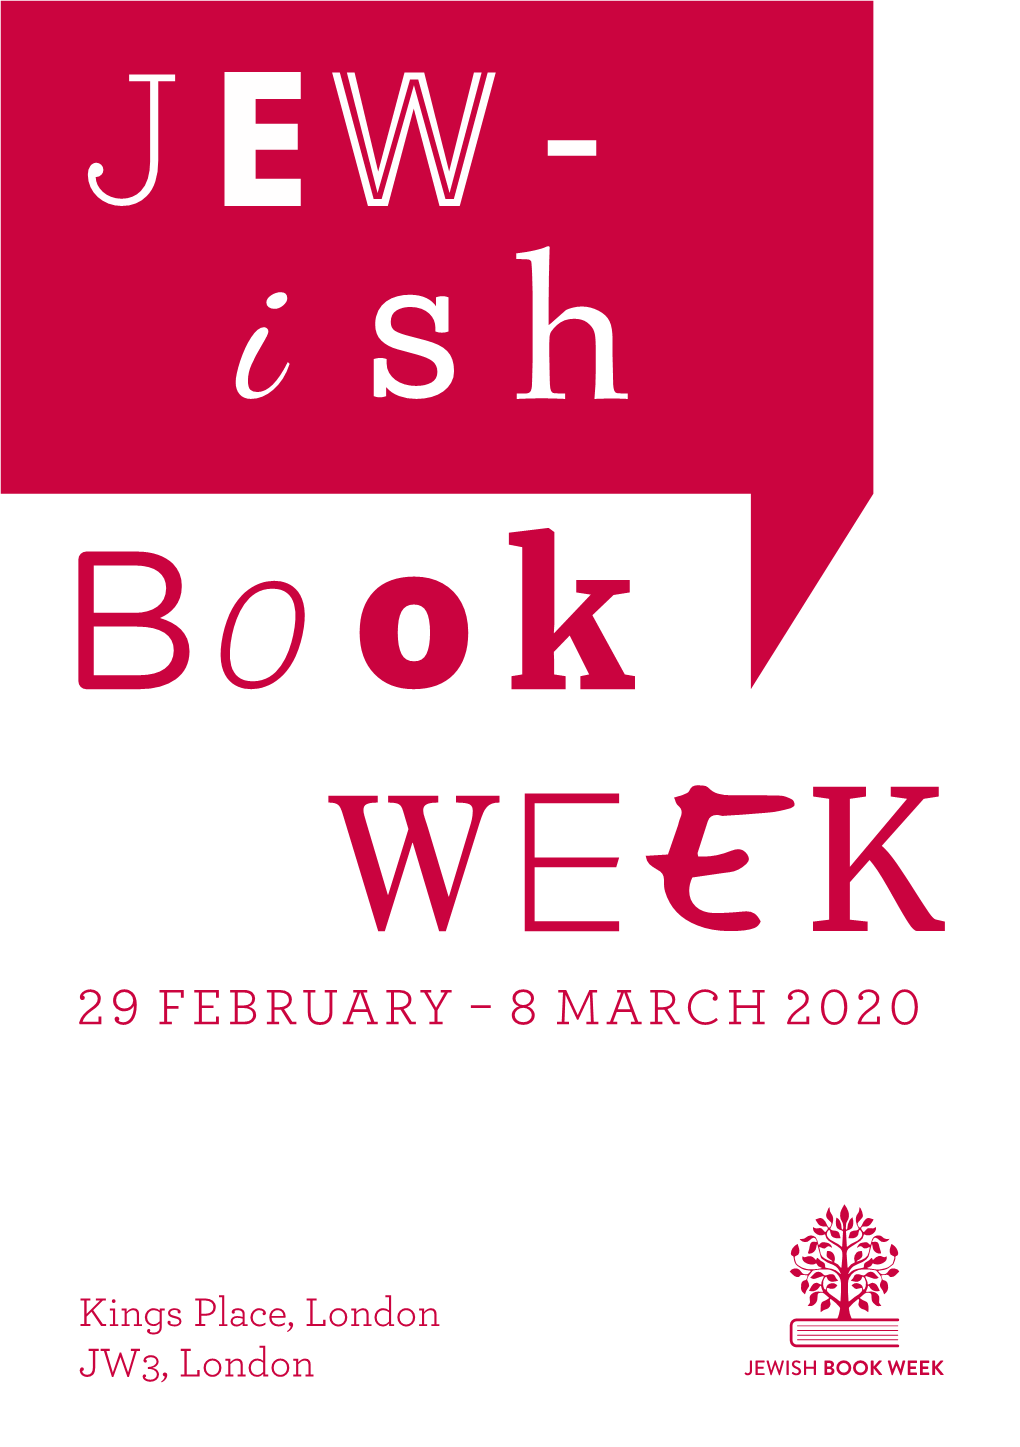 Love Jewish Book Week?